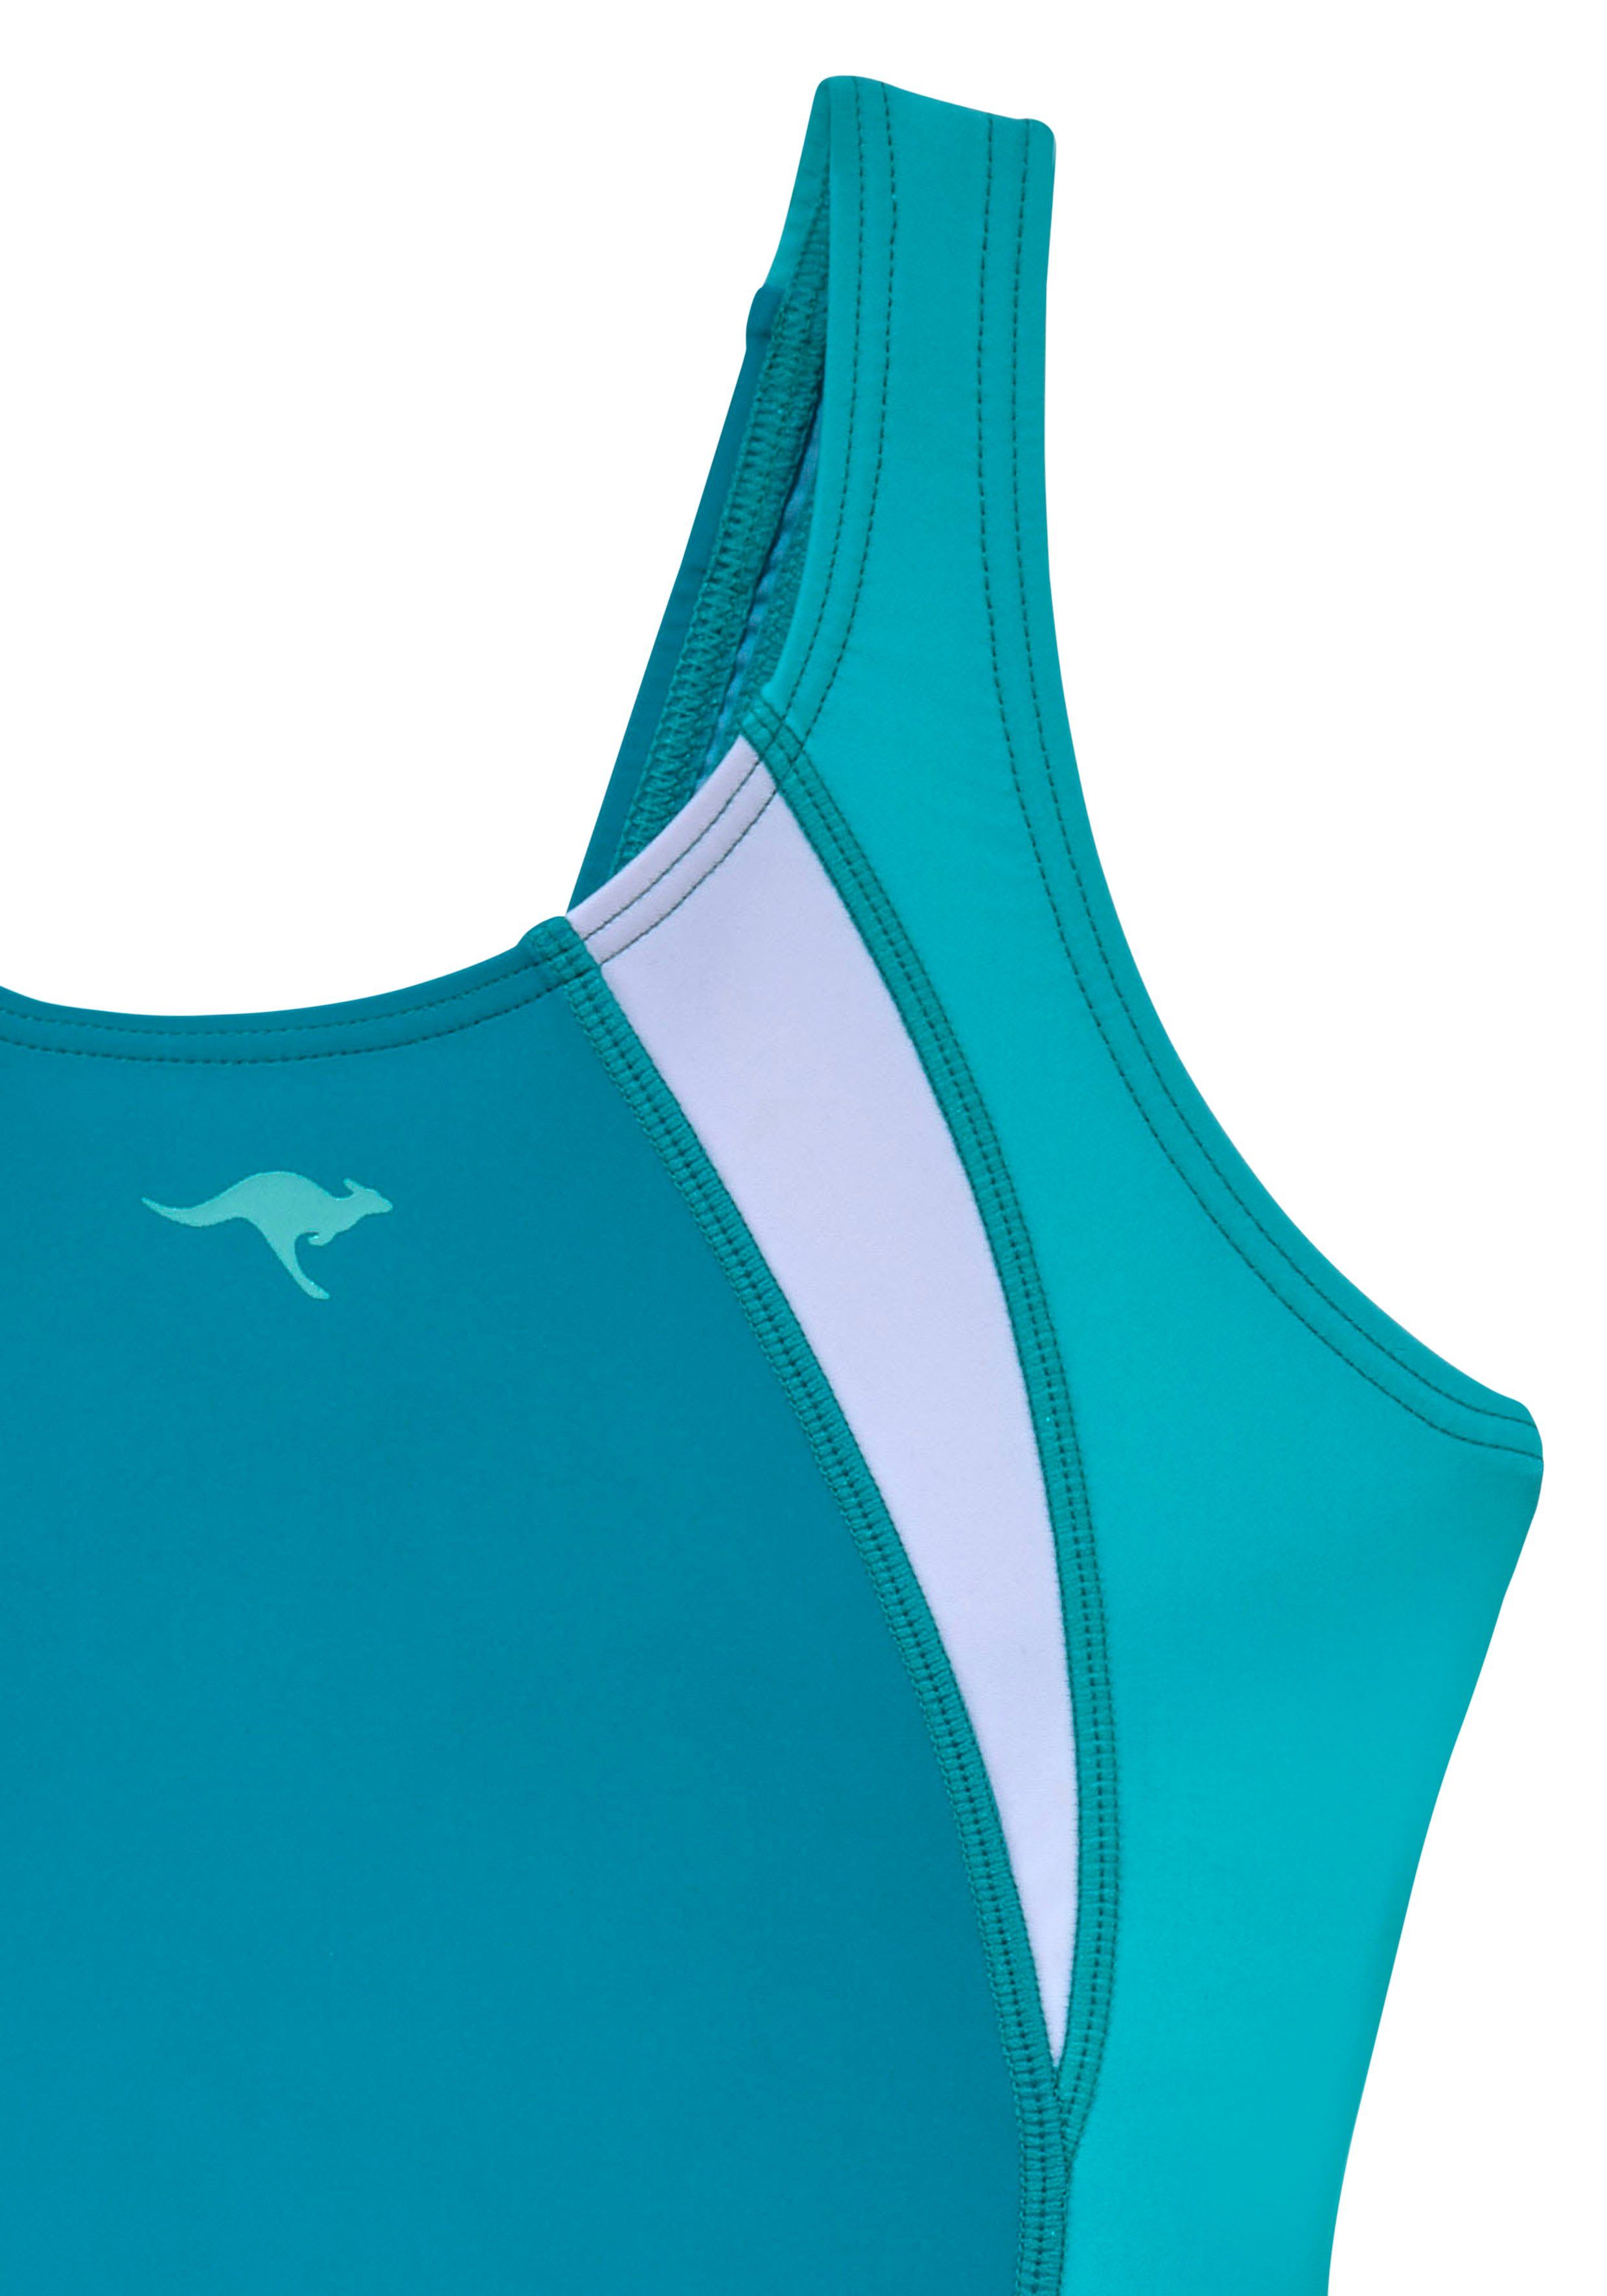 KangaROOS Badeanzug sportlichen türkis-blau im Farbmix